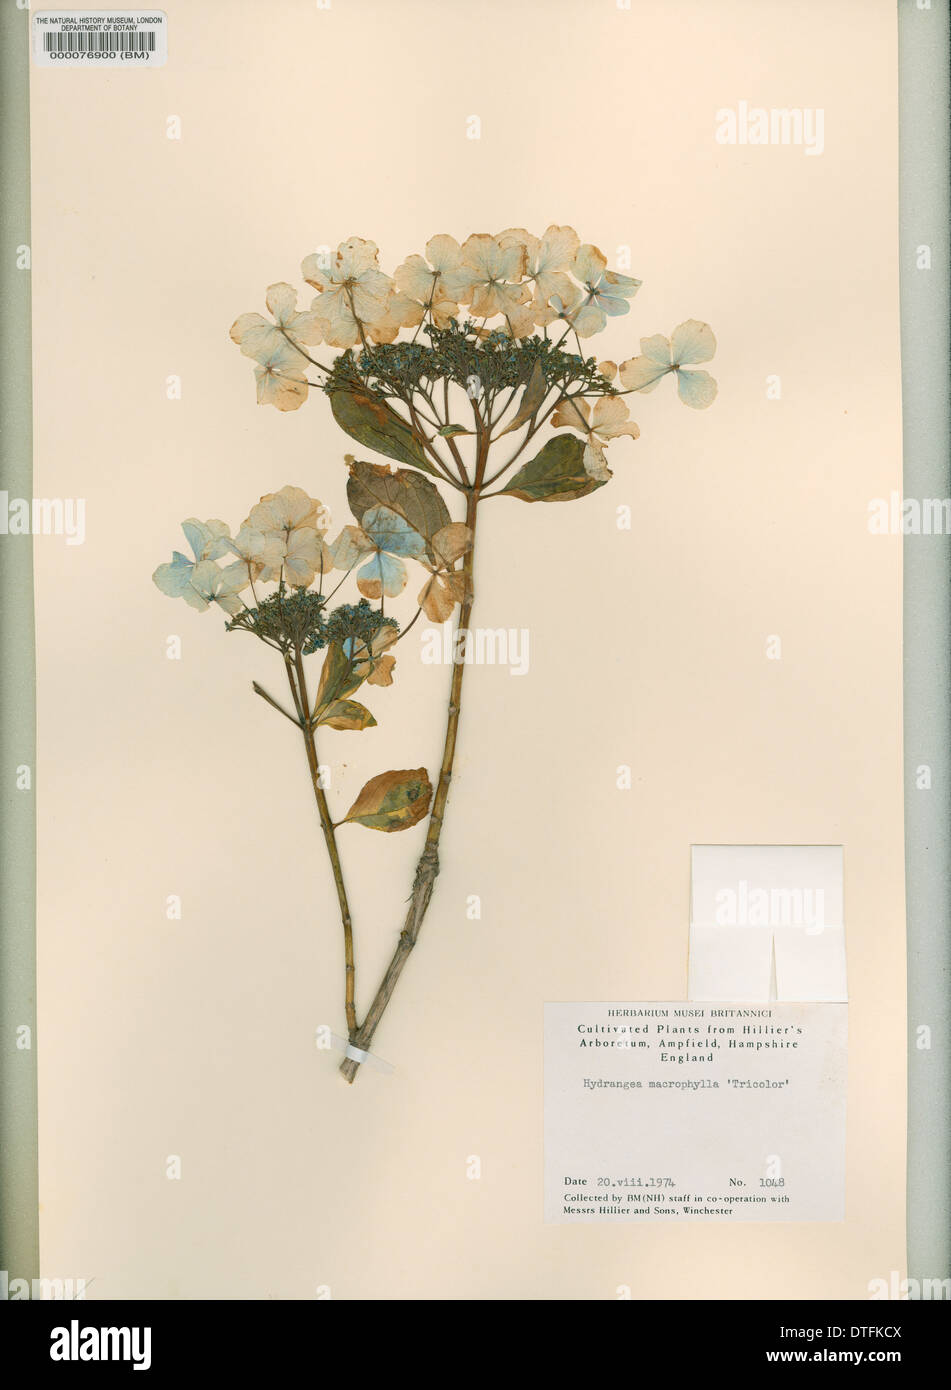 Hydrangea Macrophylla 'Tricolor', unten Hortensie. Stockfoto